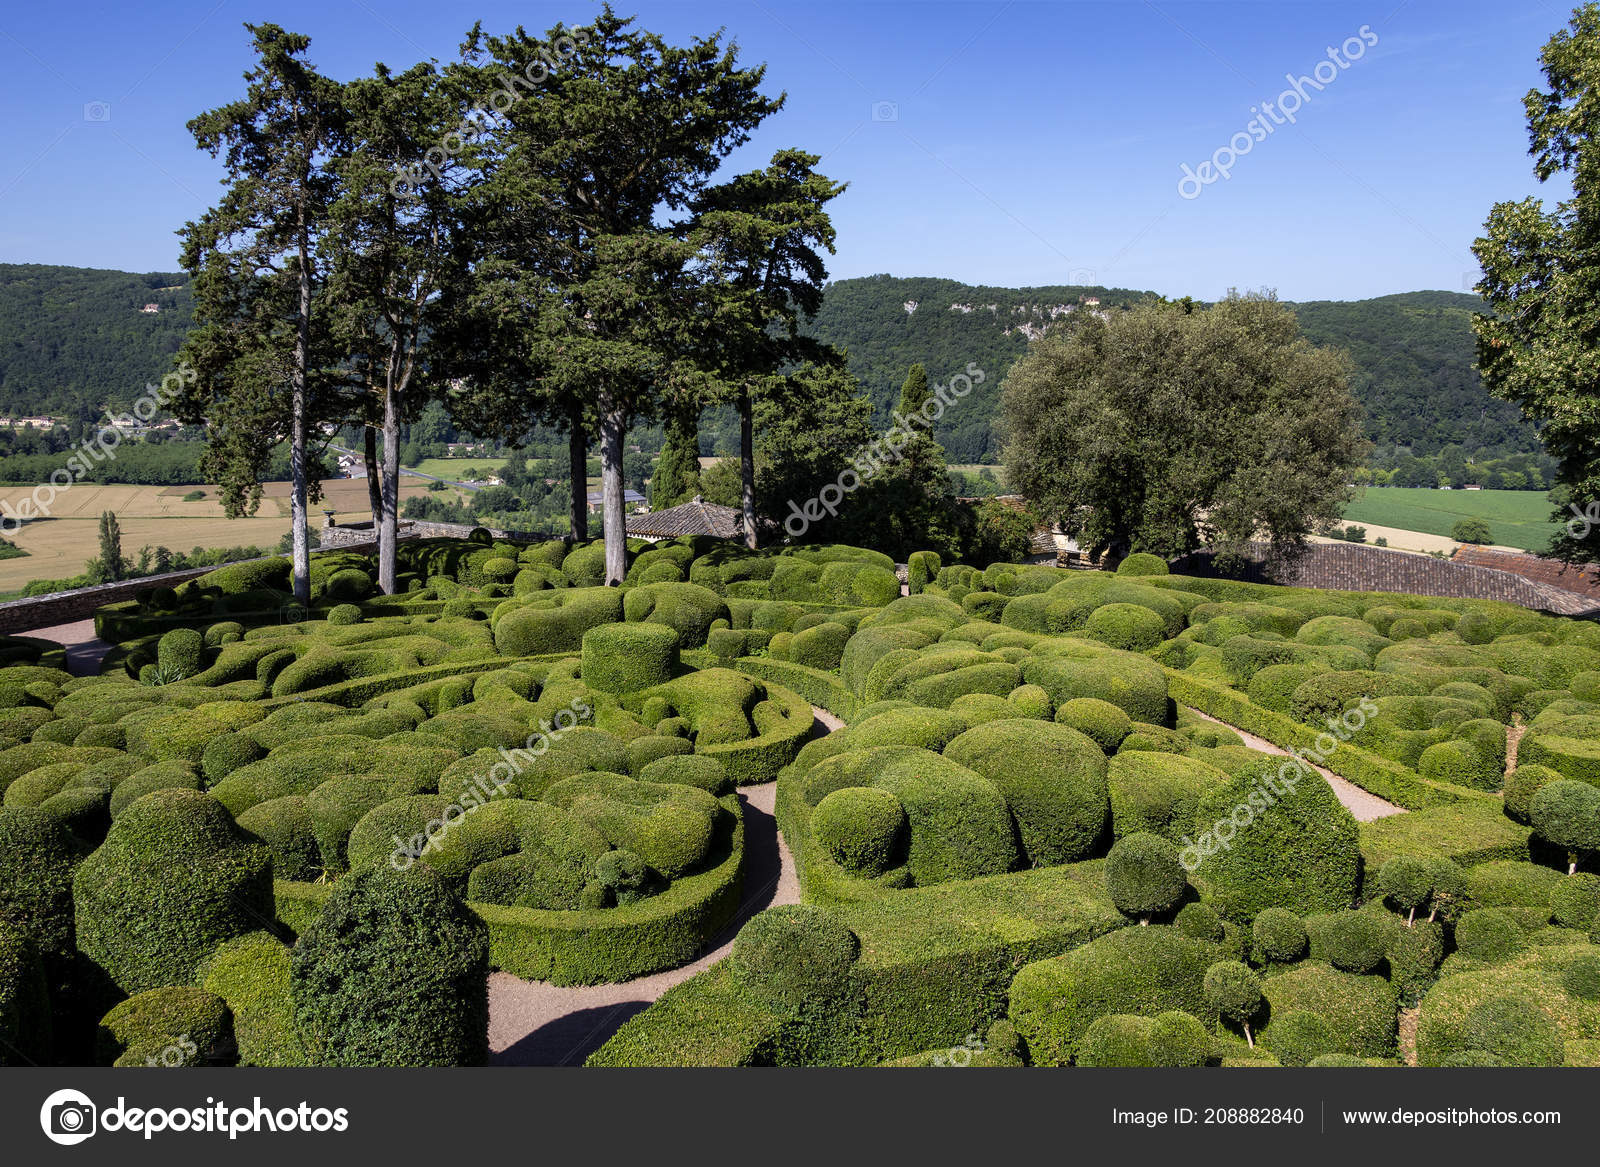 depositphotos stock photo topiary gardens jardins marqueyssac dordogne